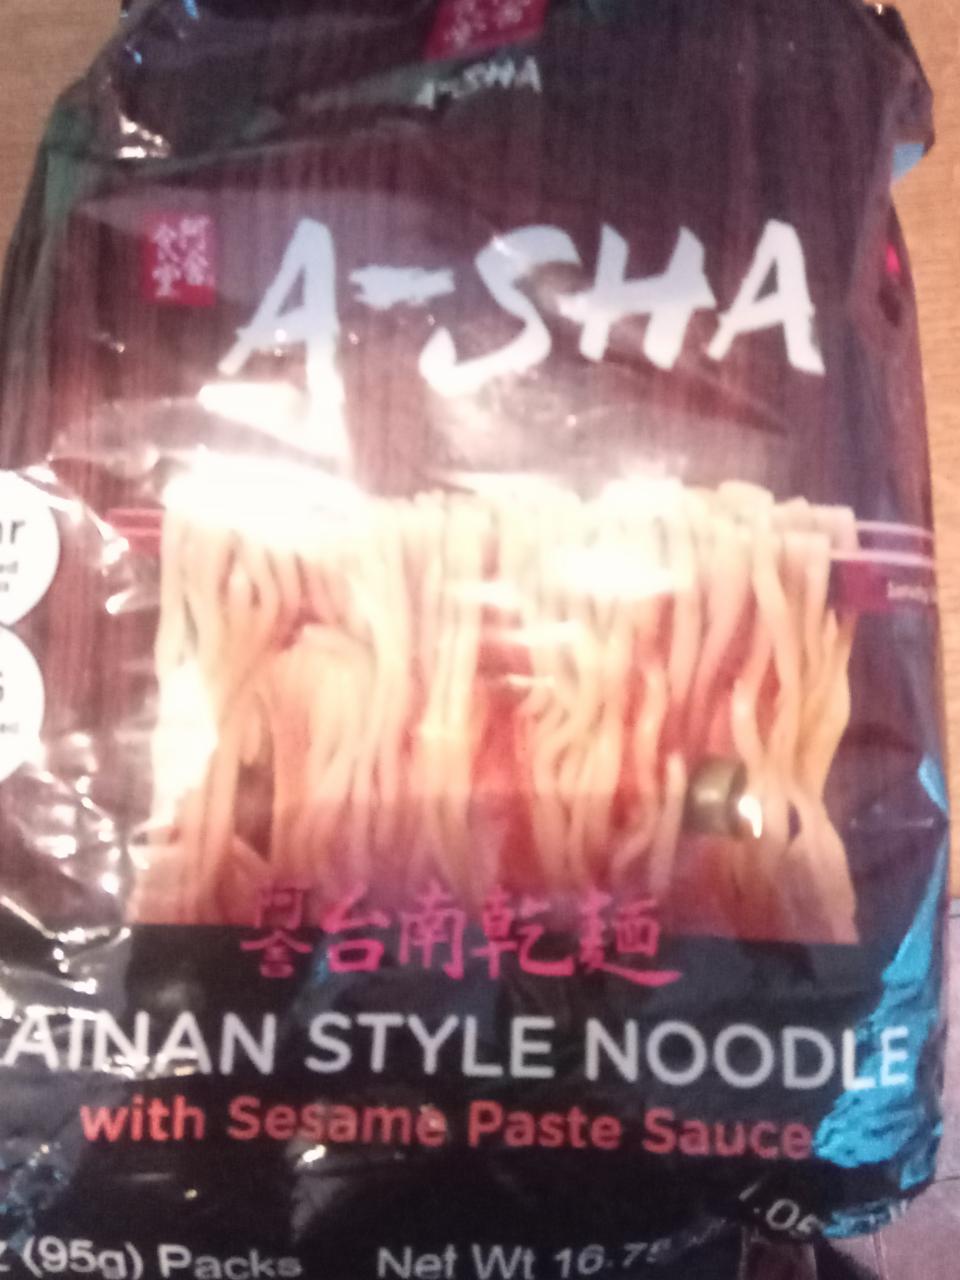 Fotografie - Tainan Style Noodle with Sesame Paste Sauce A-Sha